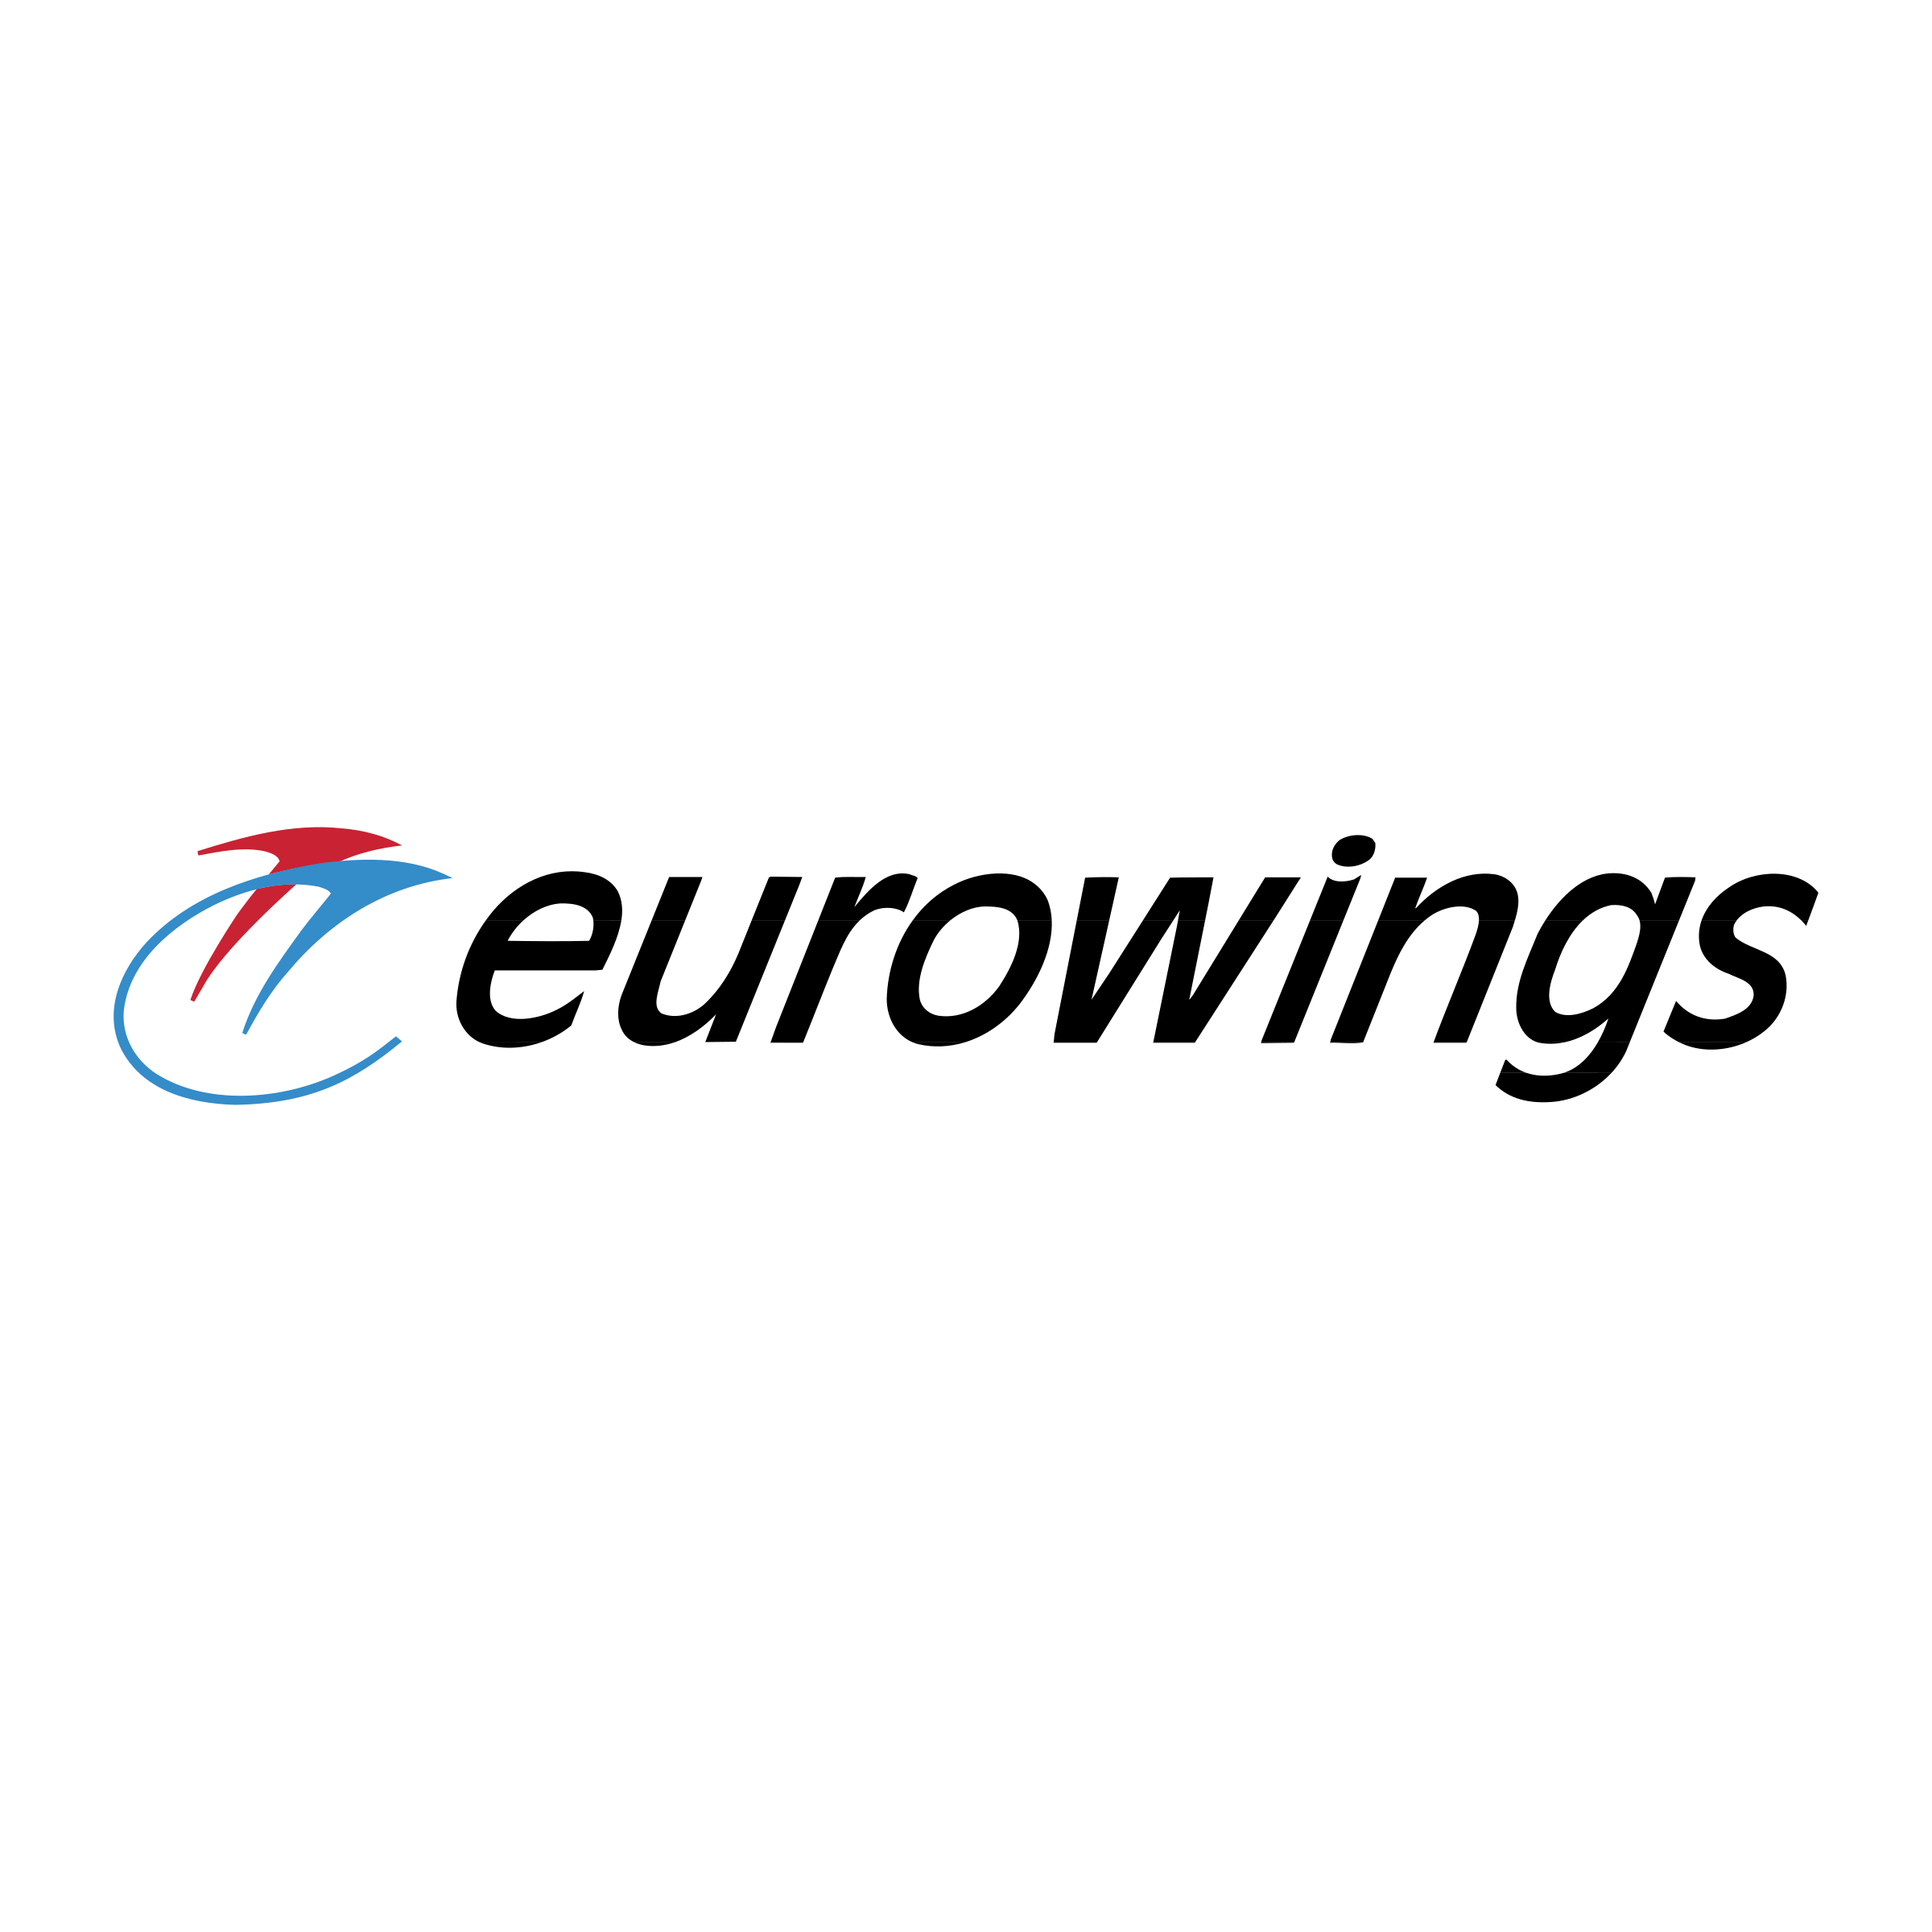 Eurowings Logo - Eurowings Logo PNG Transparent & SVG Vector